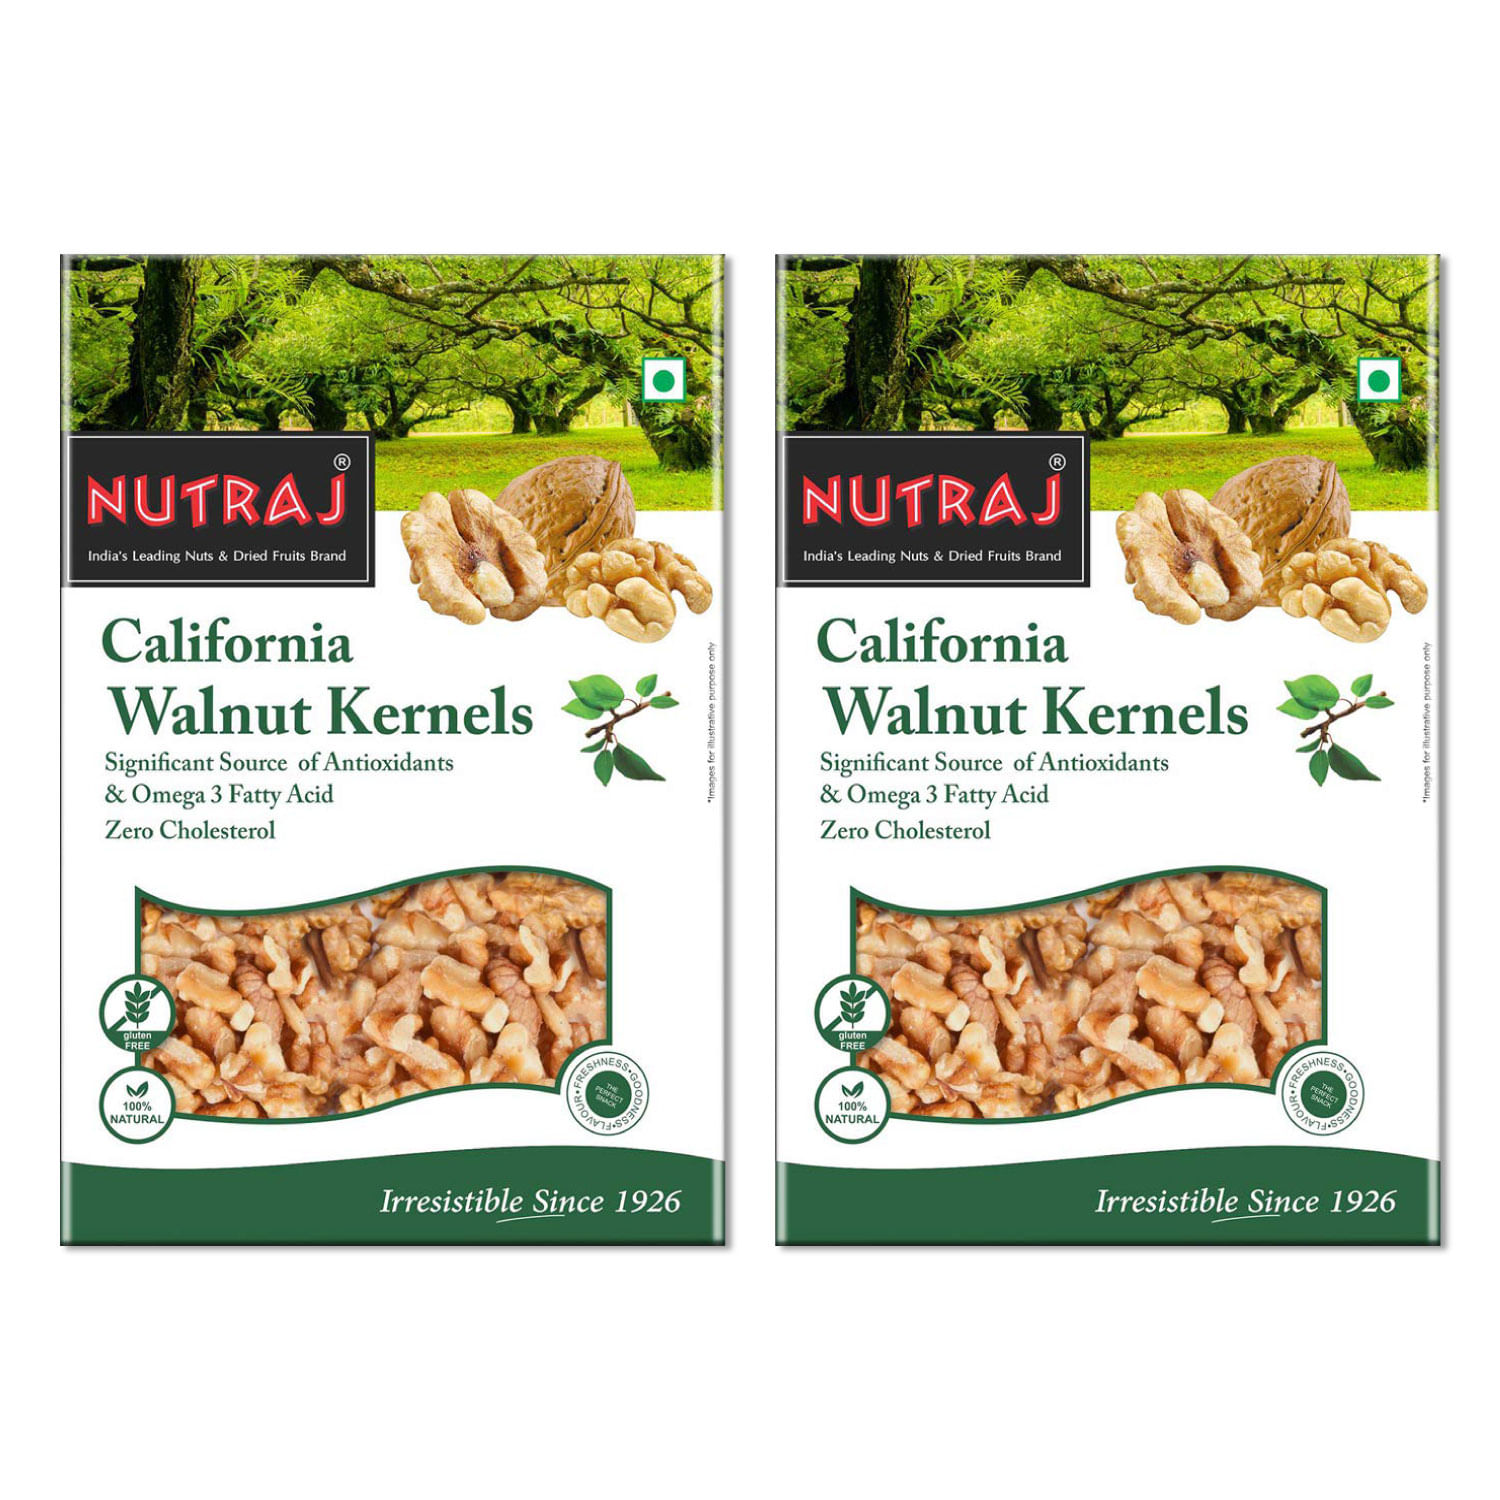 Nutraj Fard Premium Dates (500g) and Nutraj California Walnut Halves Kernels (500g) (2 X 250g)